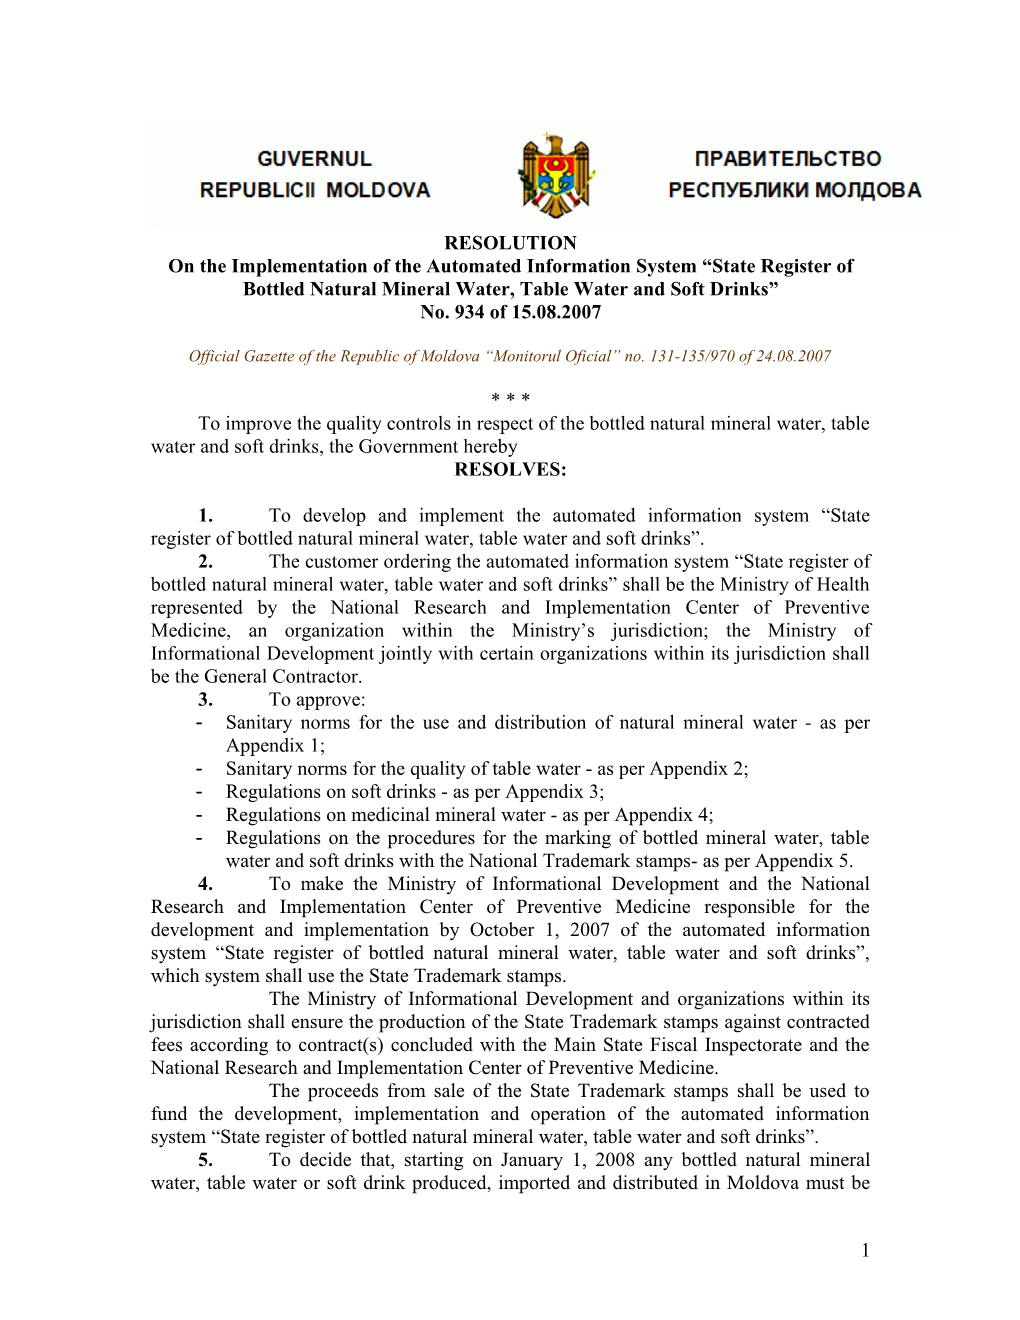 Official Gazette of the Republic of Moldova Monitorul Oficial No. 131-135/970 of 24.08.2007